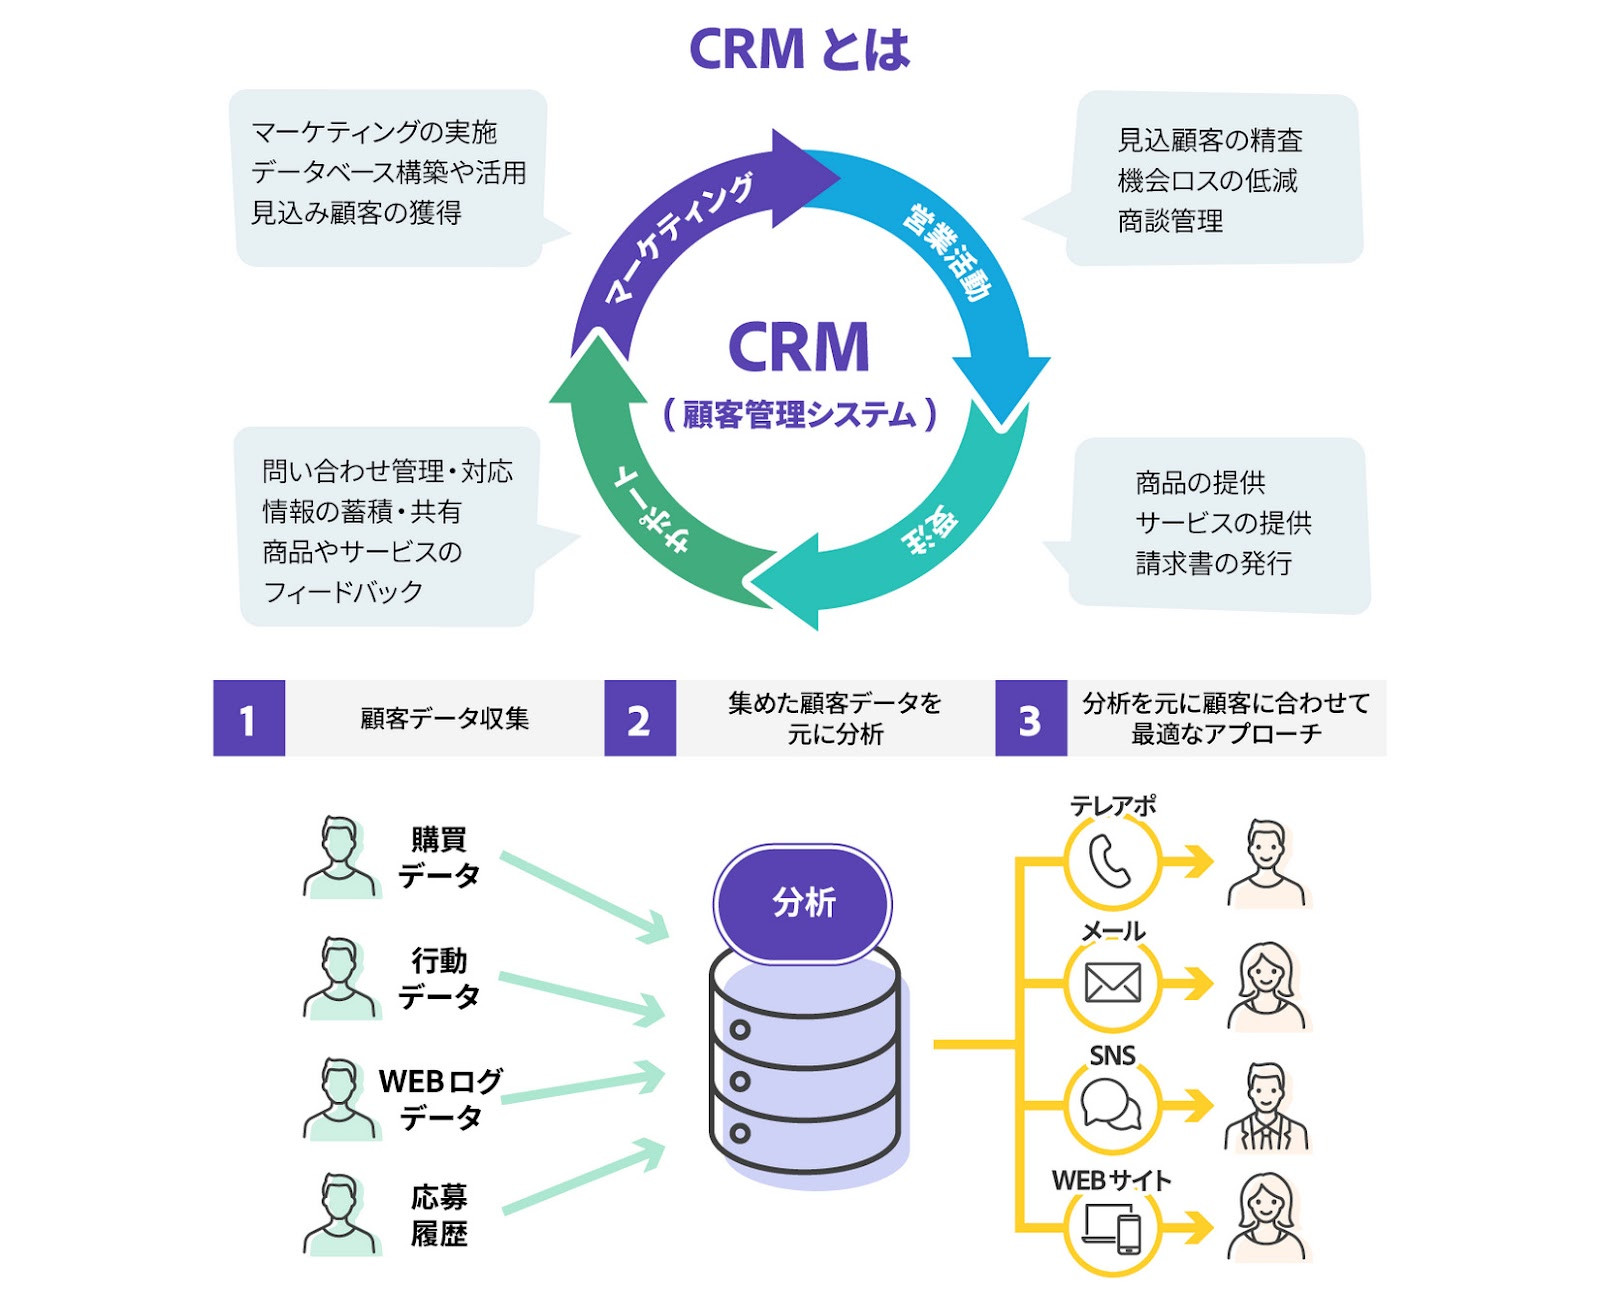 CRM（Customer Relationship Management）